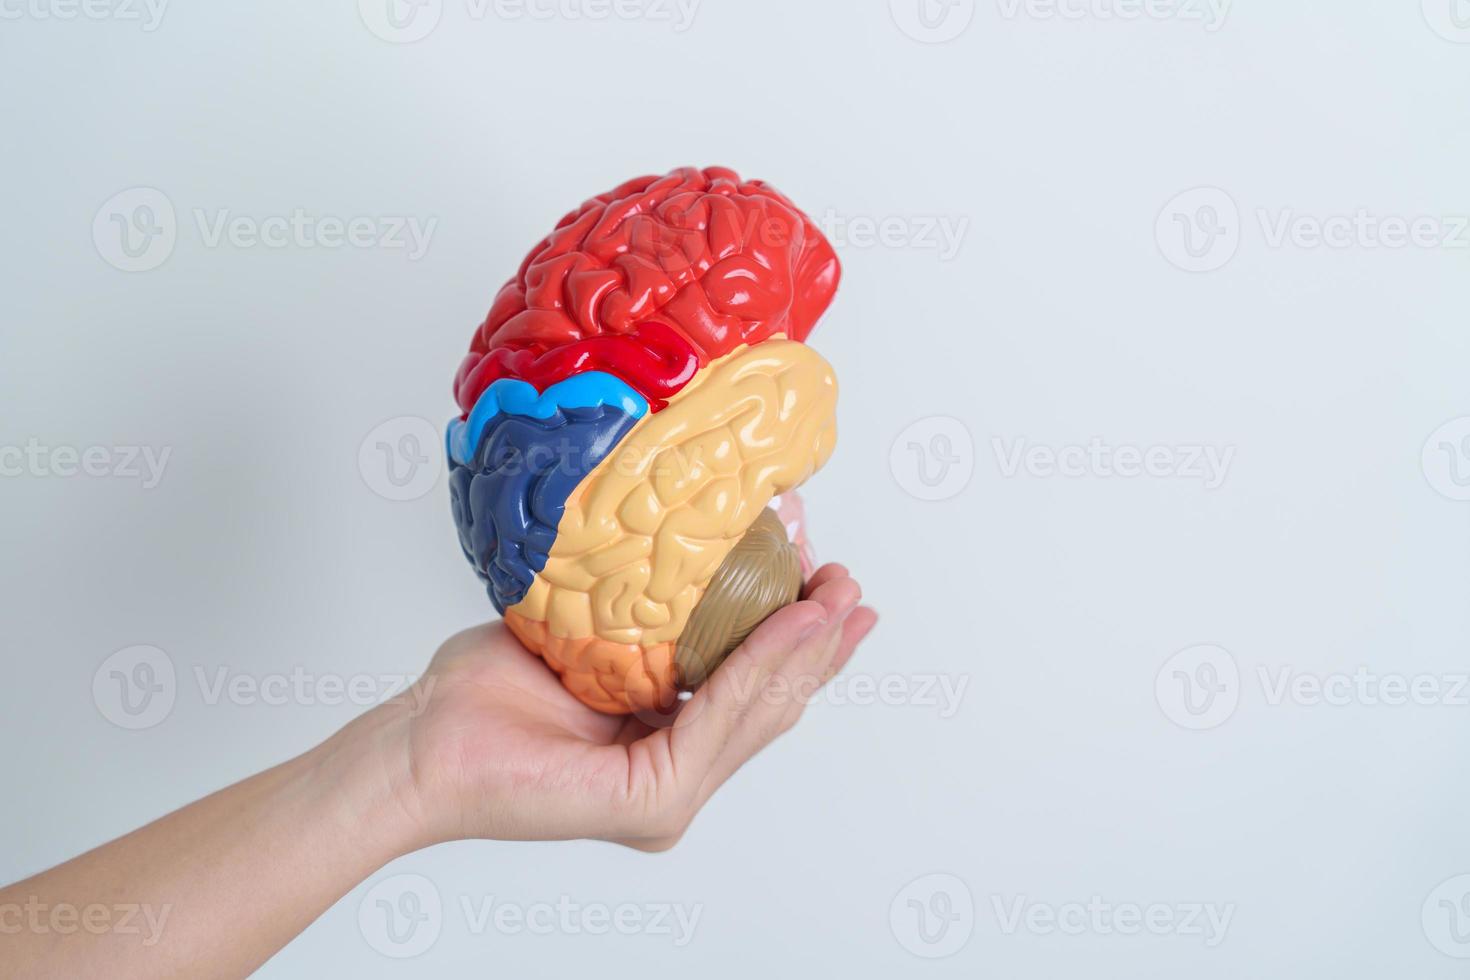 mulher segurando humano cérebro modelo. mundo cérebro tumor dia, cérebro AVC, demência, Alzheimer, Parkinson e mundo mental saúde conceito foto